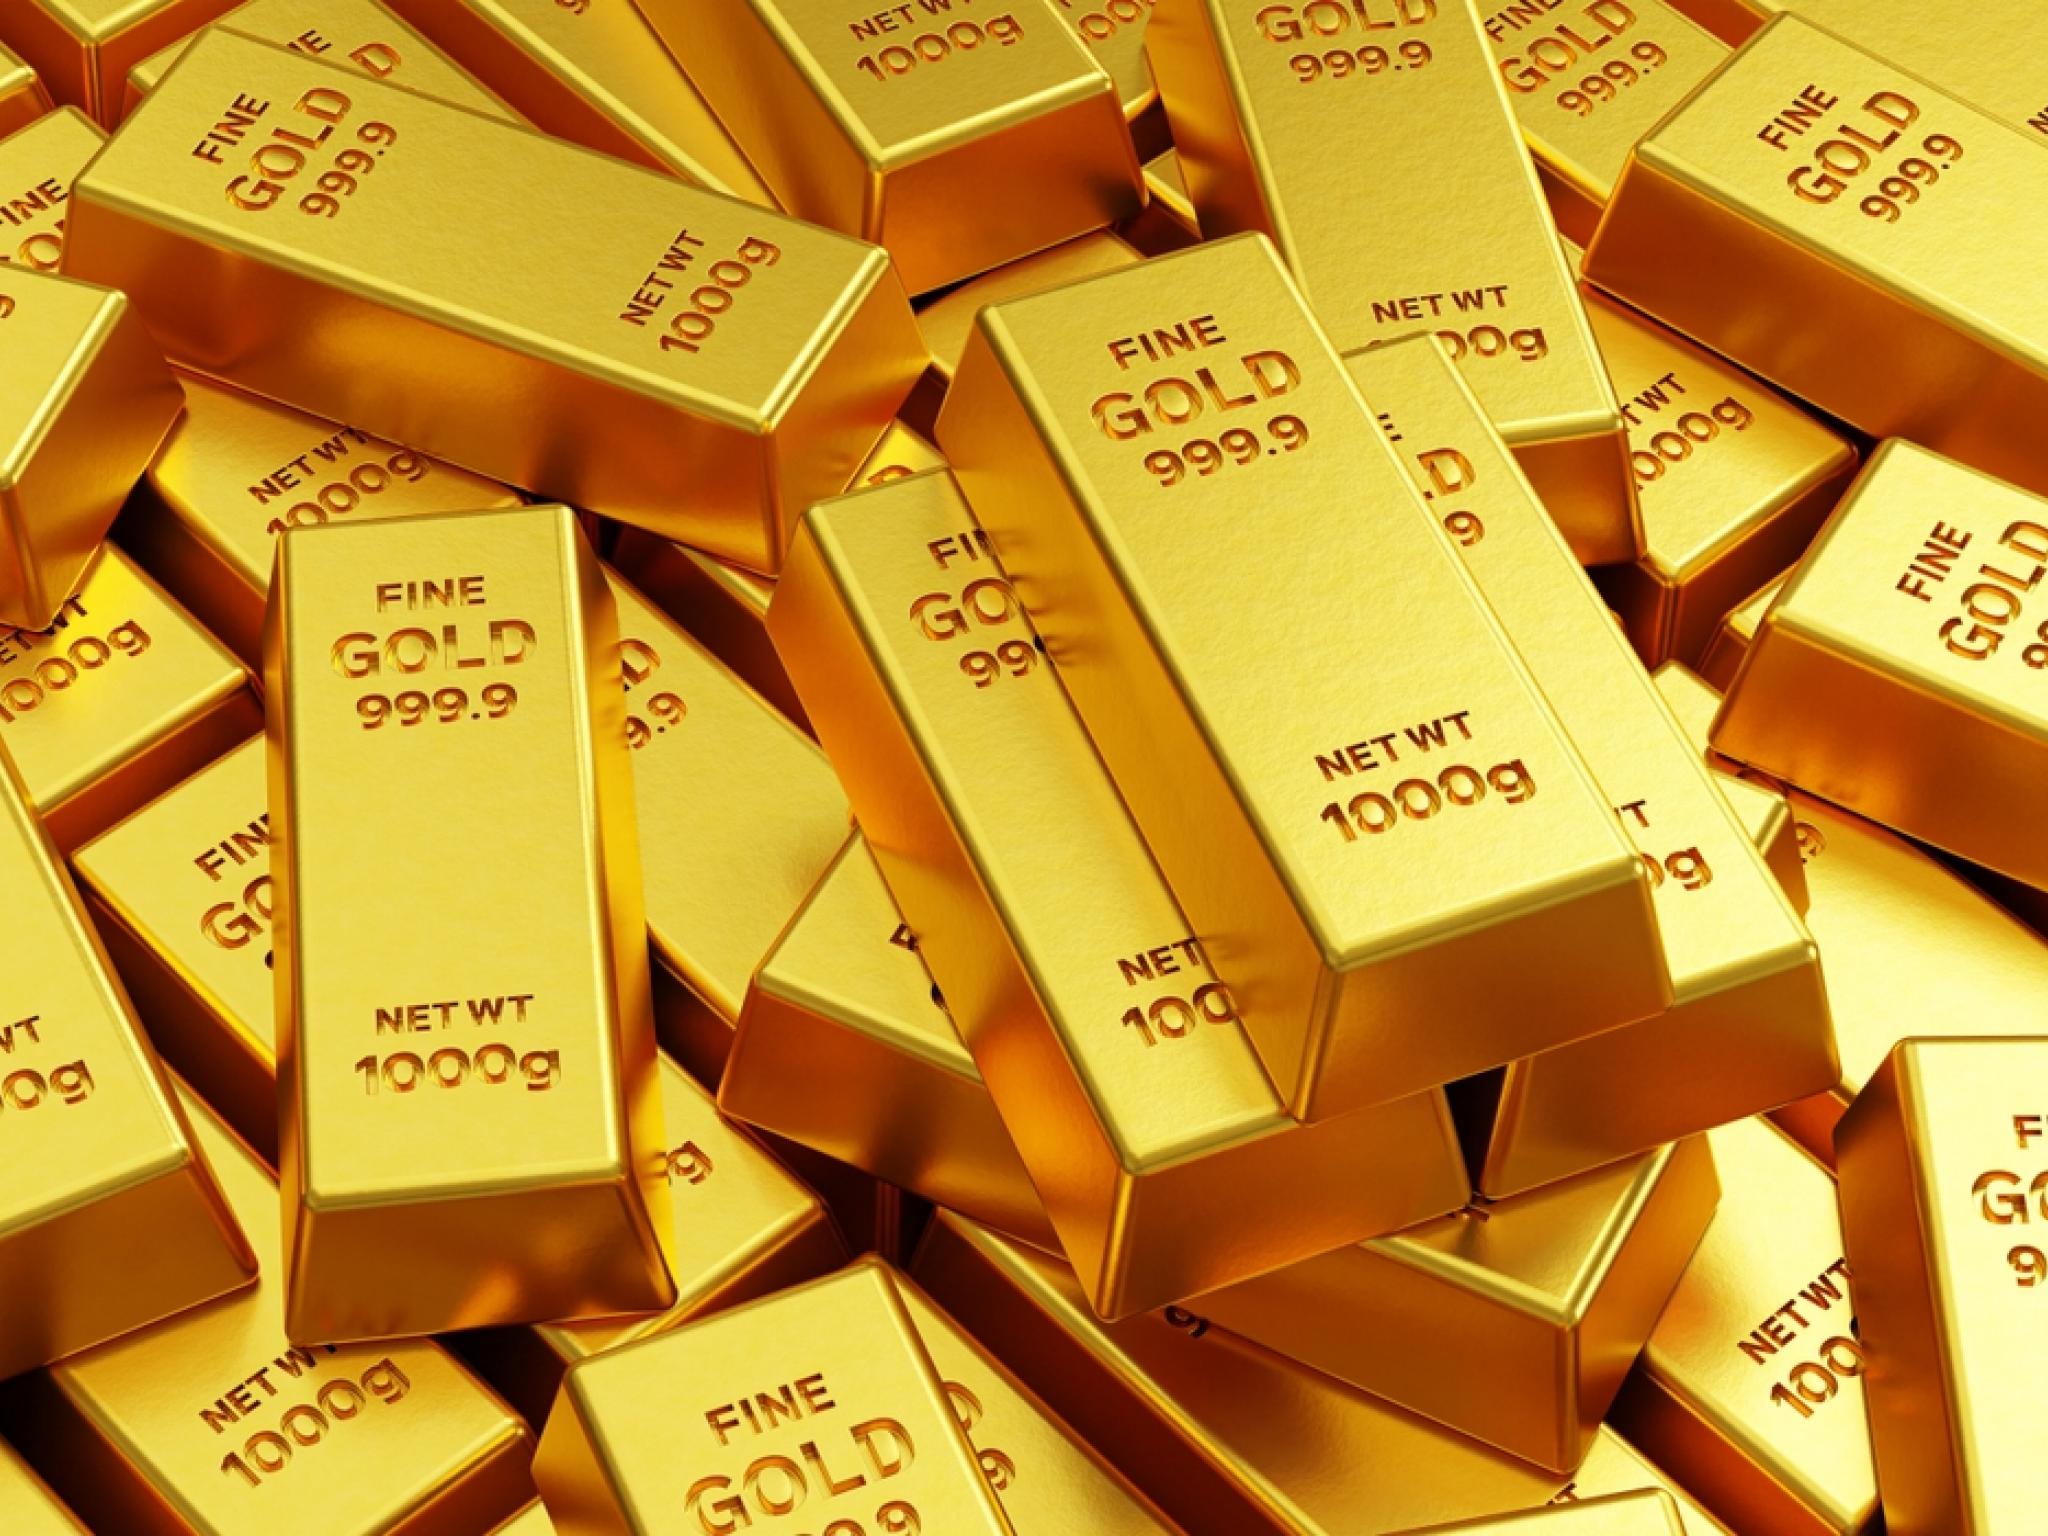  pimco-executive-says-gold-still-looks-expensive-despite-recent-declines-but-long-term-sheen-intact 